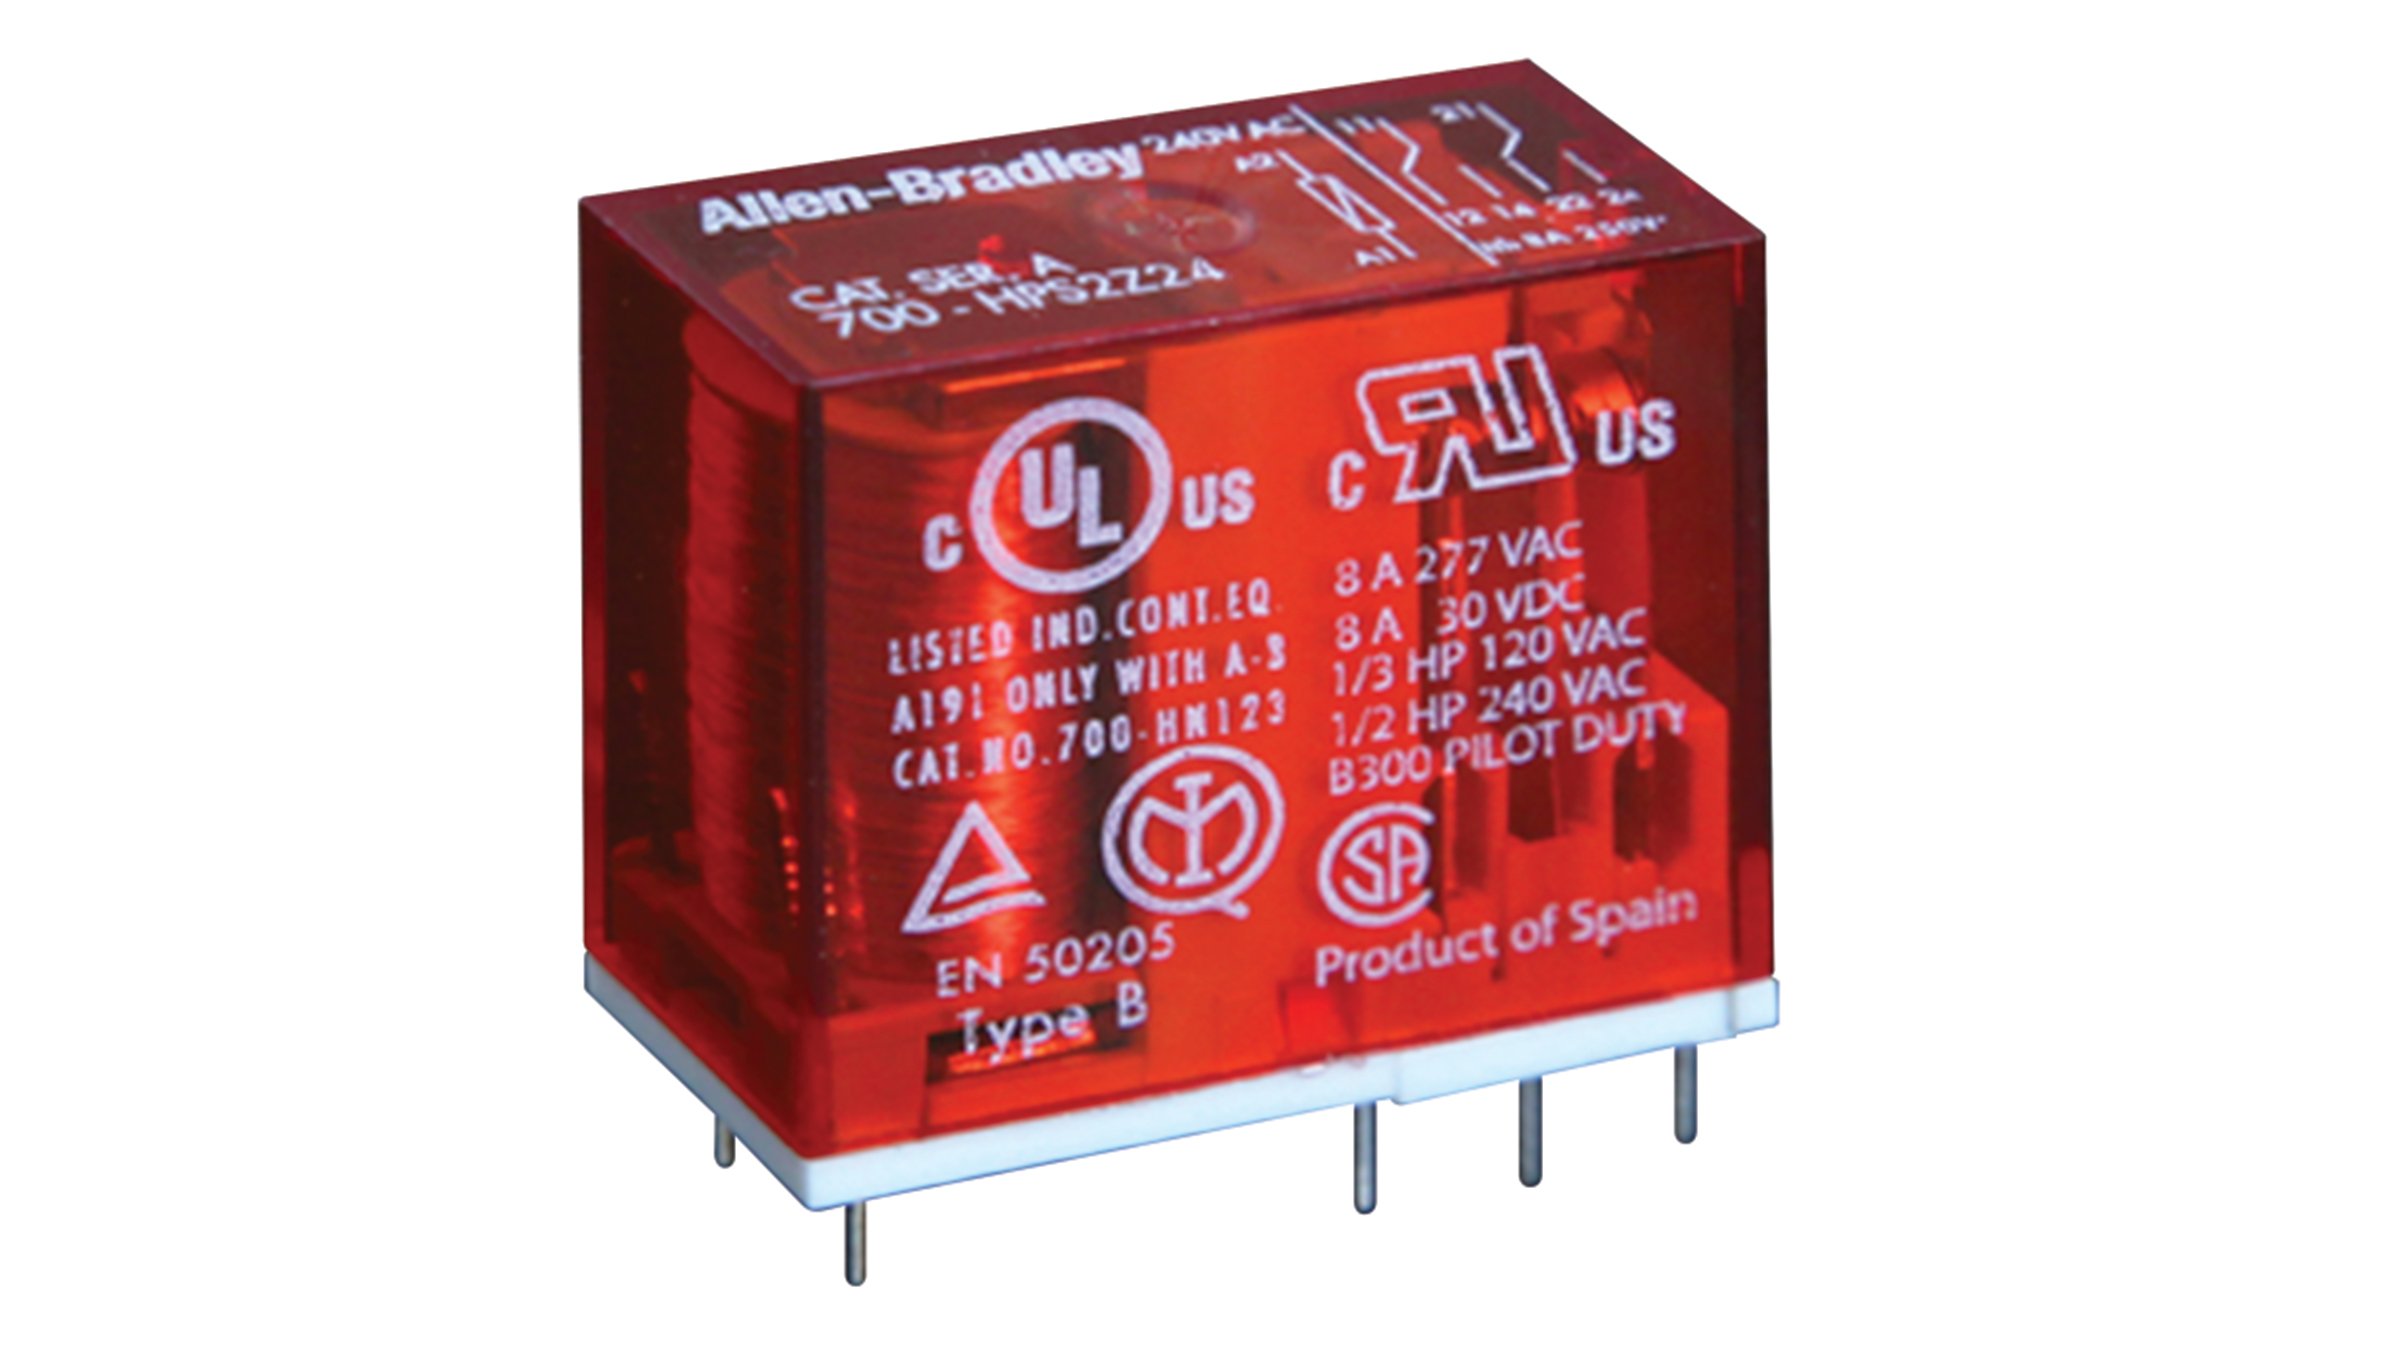 Allen-Bradley Bulletin 700-HPS PCB 插针式安全控制继电器具有红色盖板，以及安全电路所需的 8 插针机械连接触点